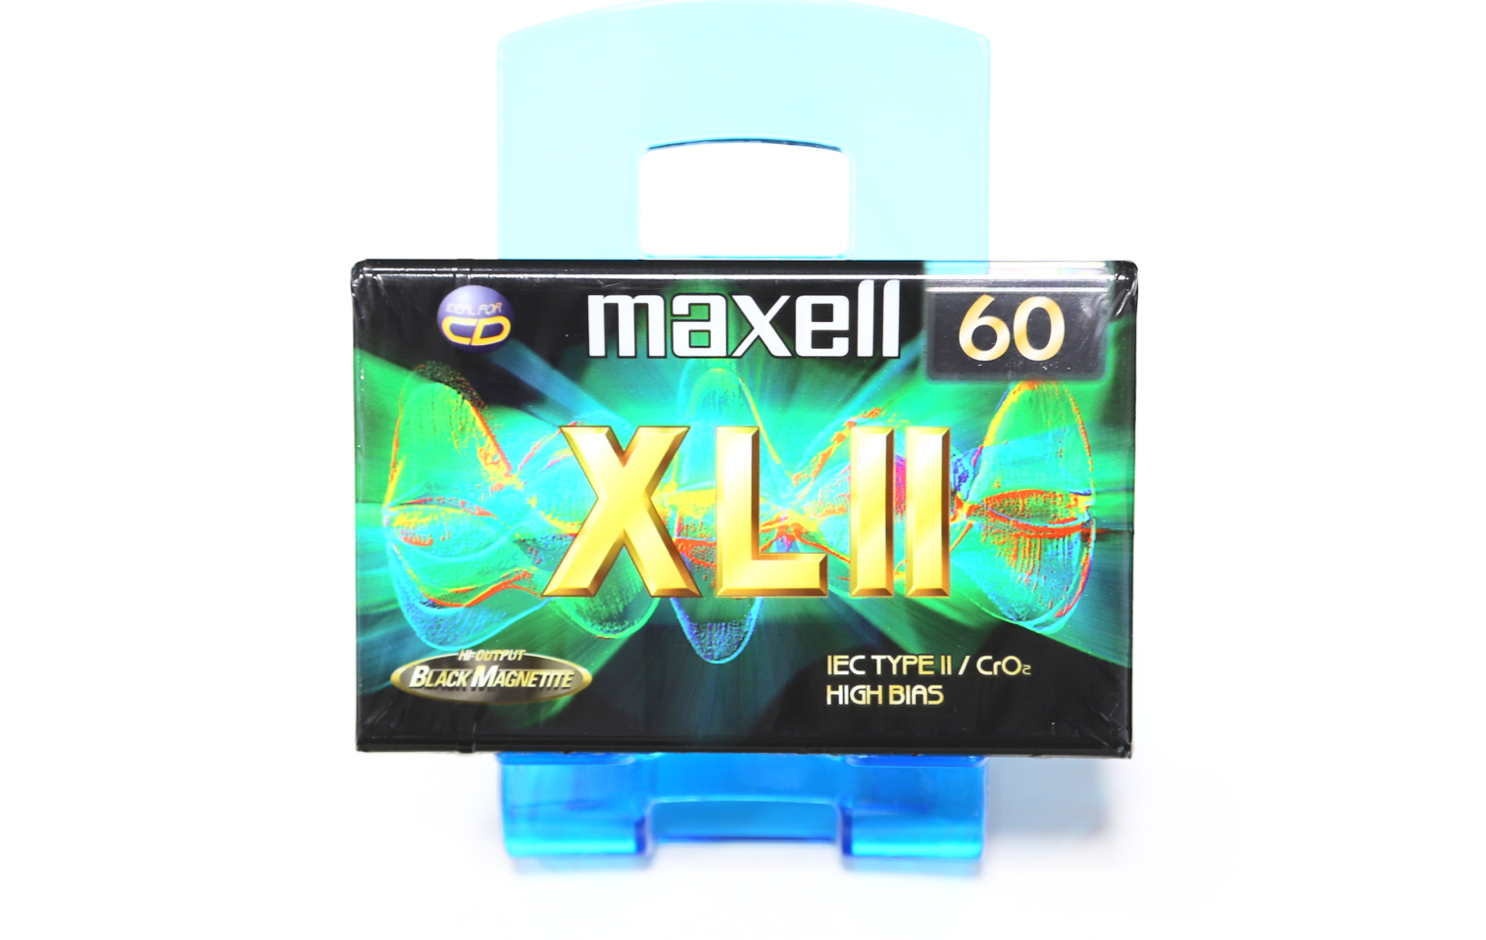 MAXELL XLII-60 Black Magnetite